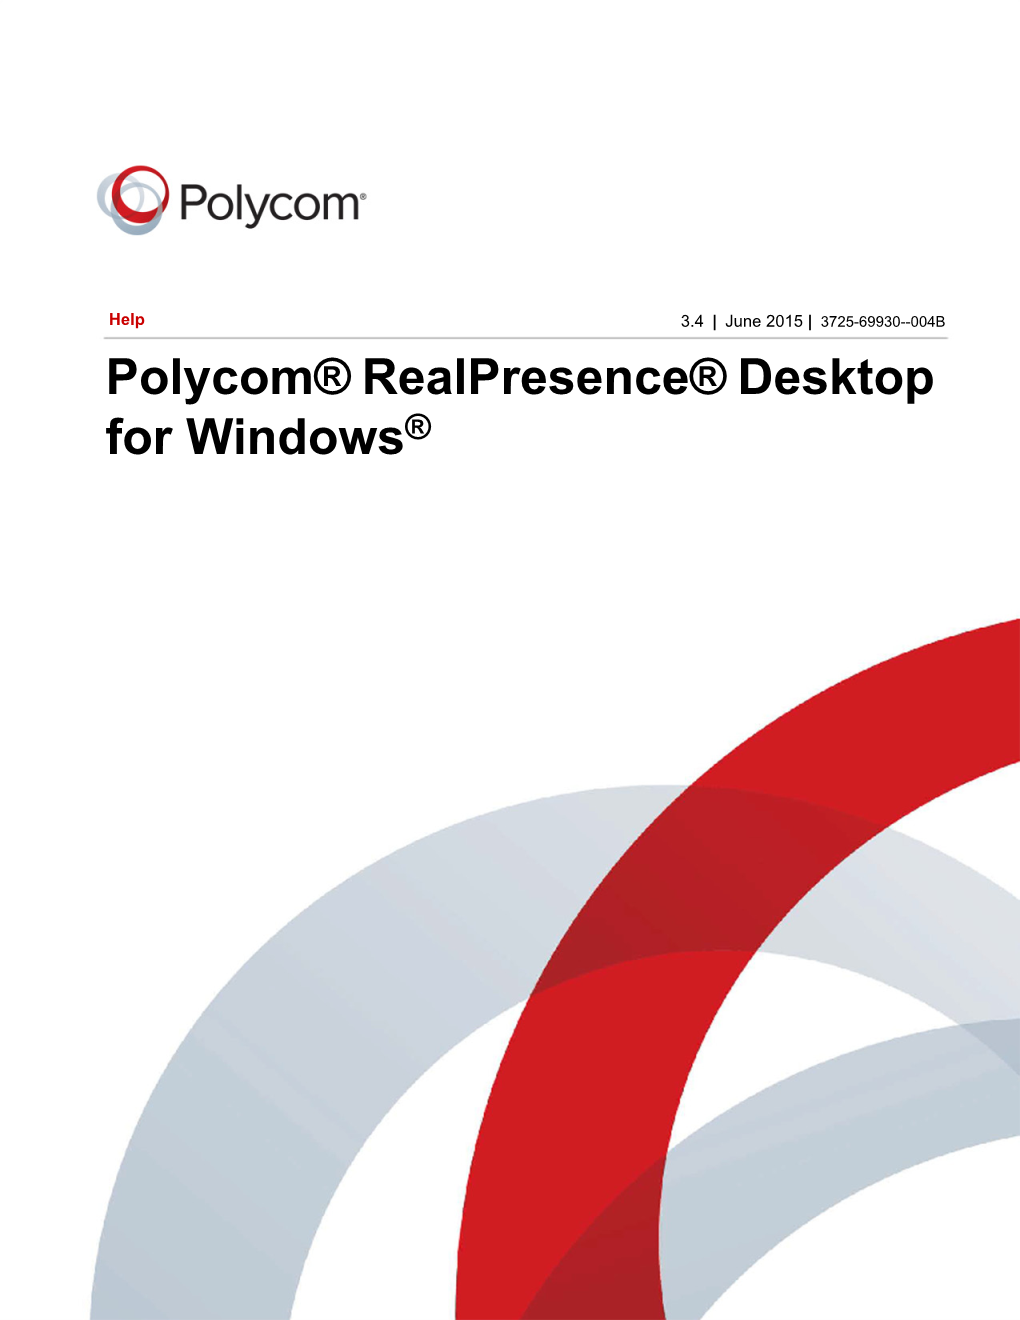 Polycom Realpresence Desktop for Windows Help